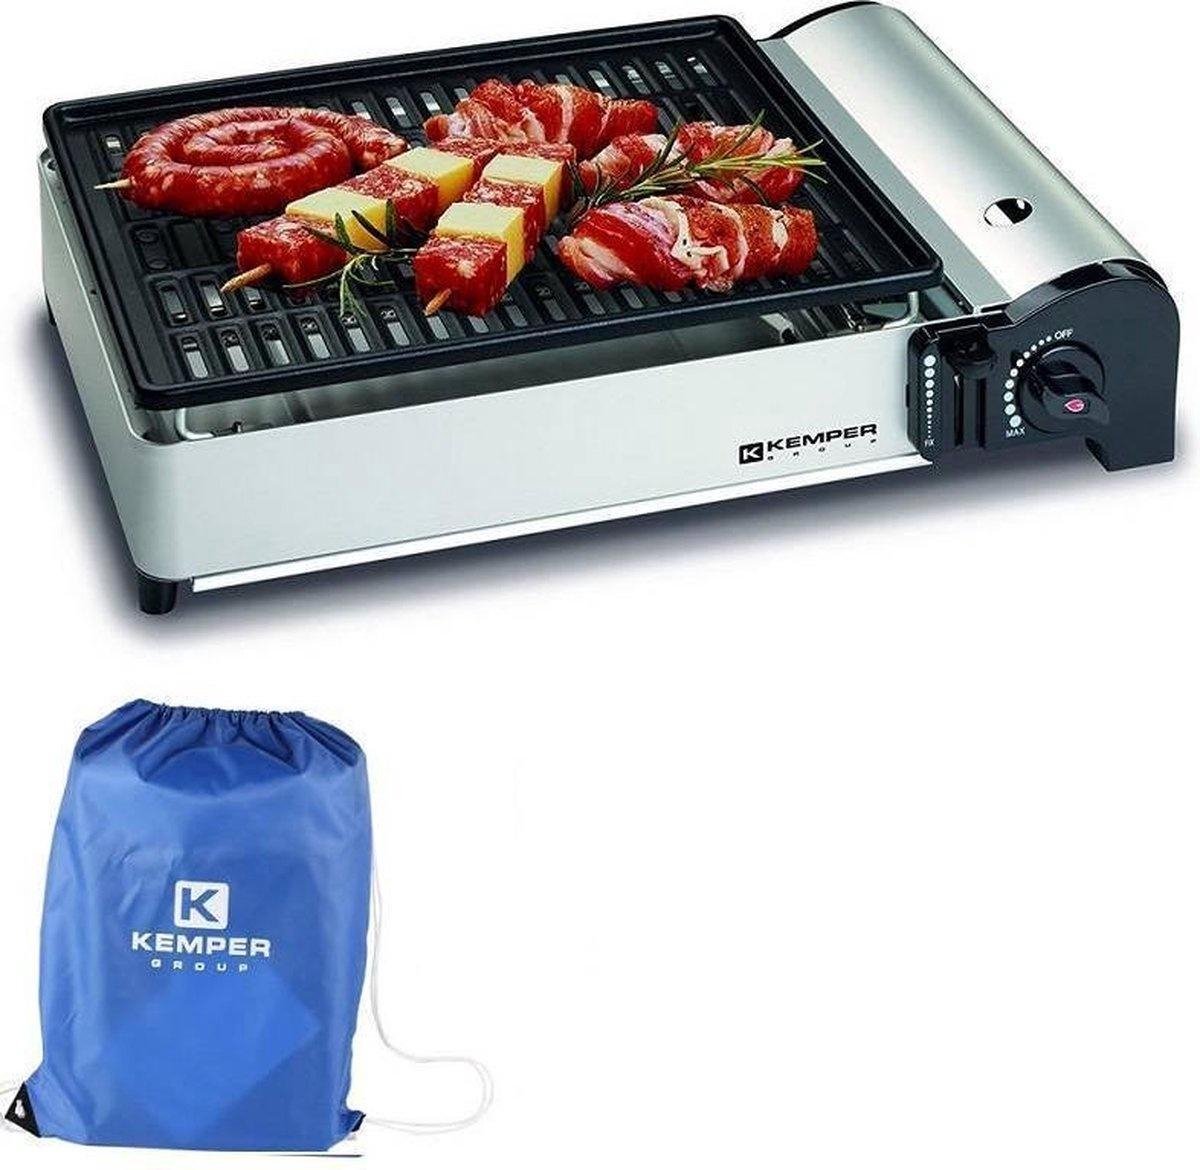 Portable smart gas barbecue - Tafelbarbecue - Campingkooktoestel | bol.com